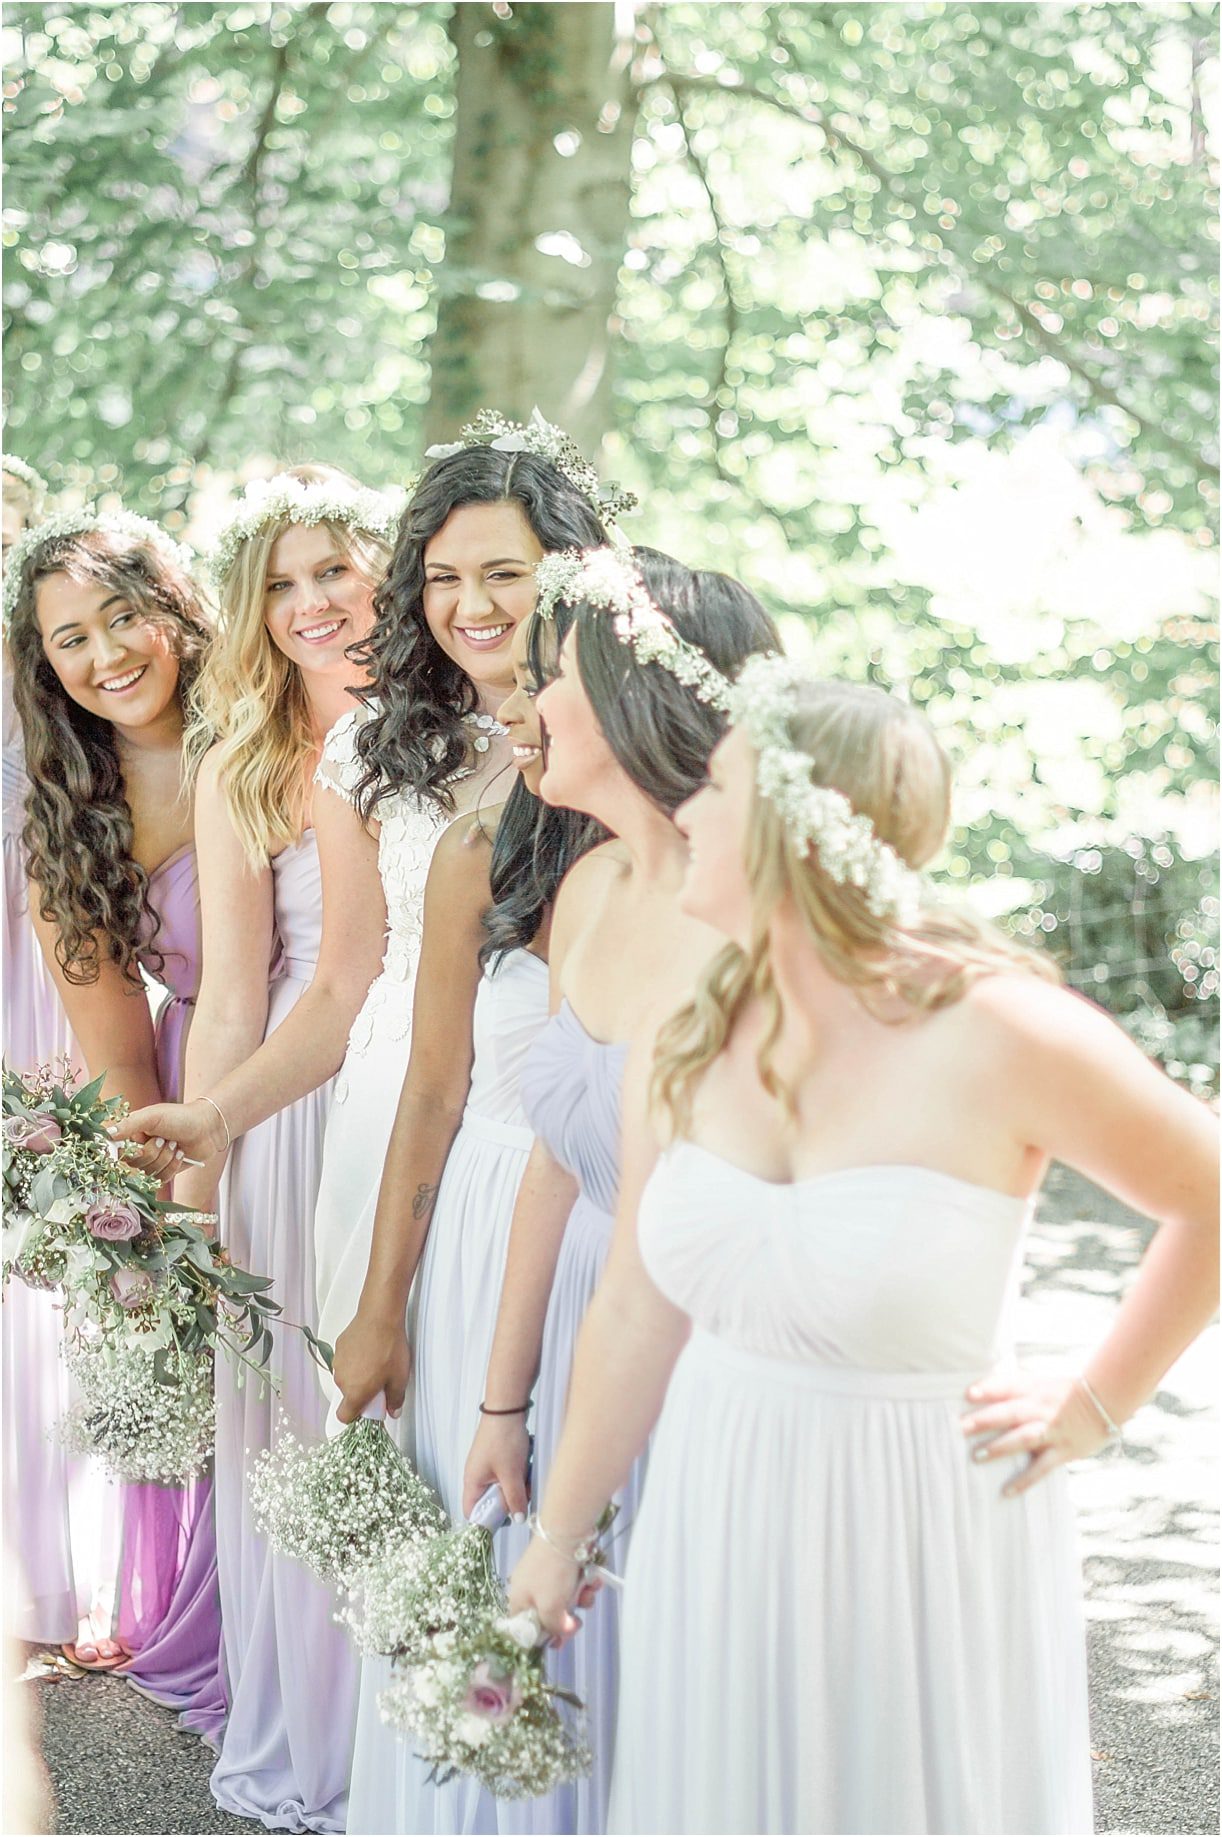 Interracial Lavender Richmond Virginia Wedding as seen on Hill City Bride Blog by Demi Mabry Photography bridesmaids dresses